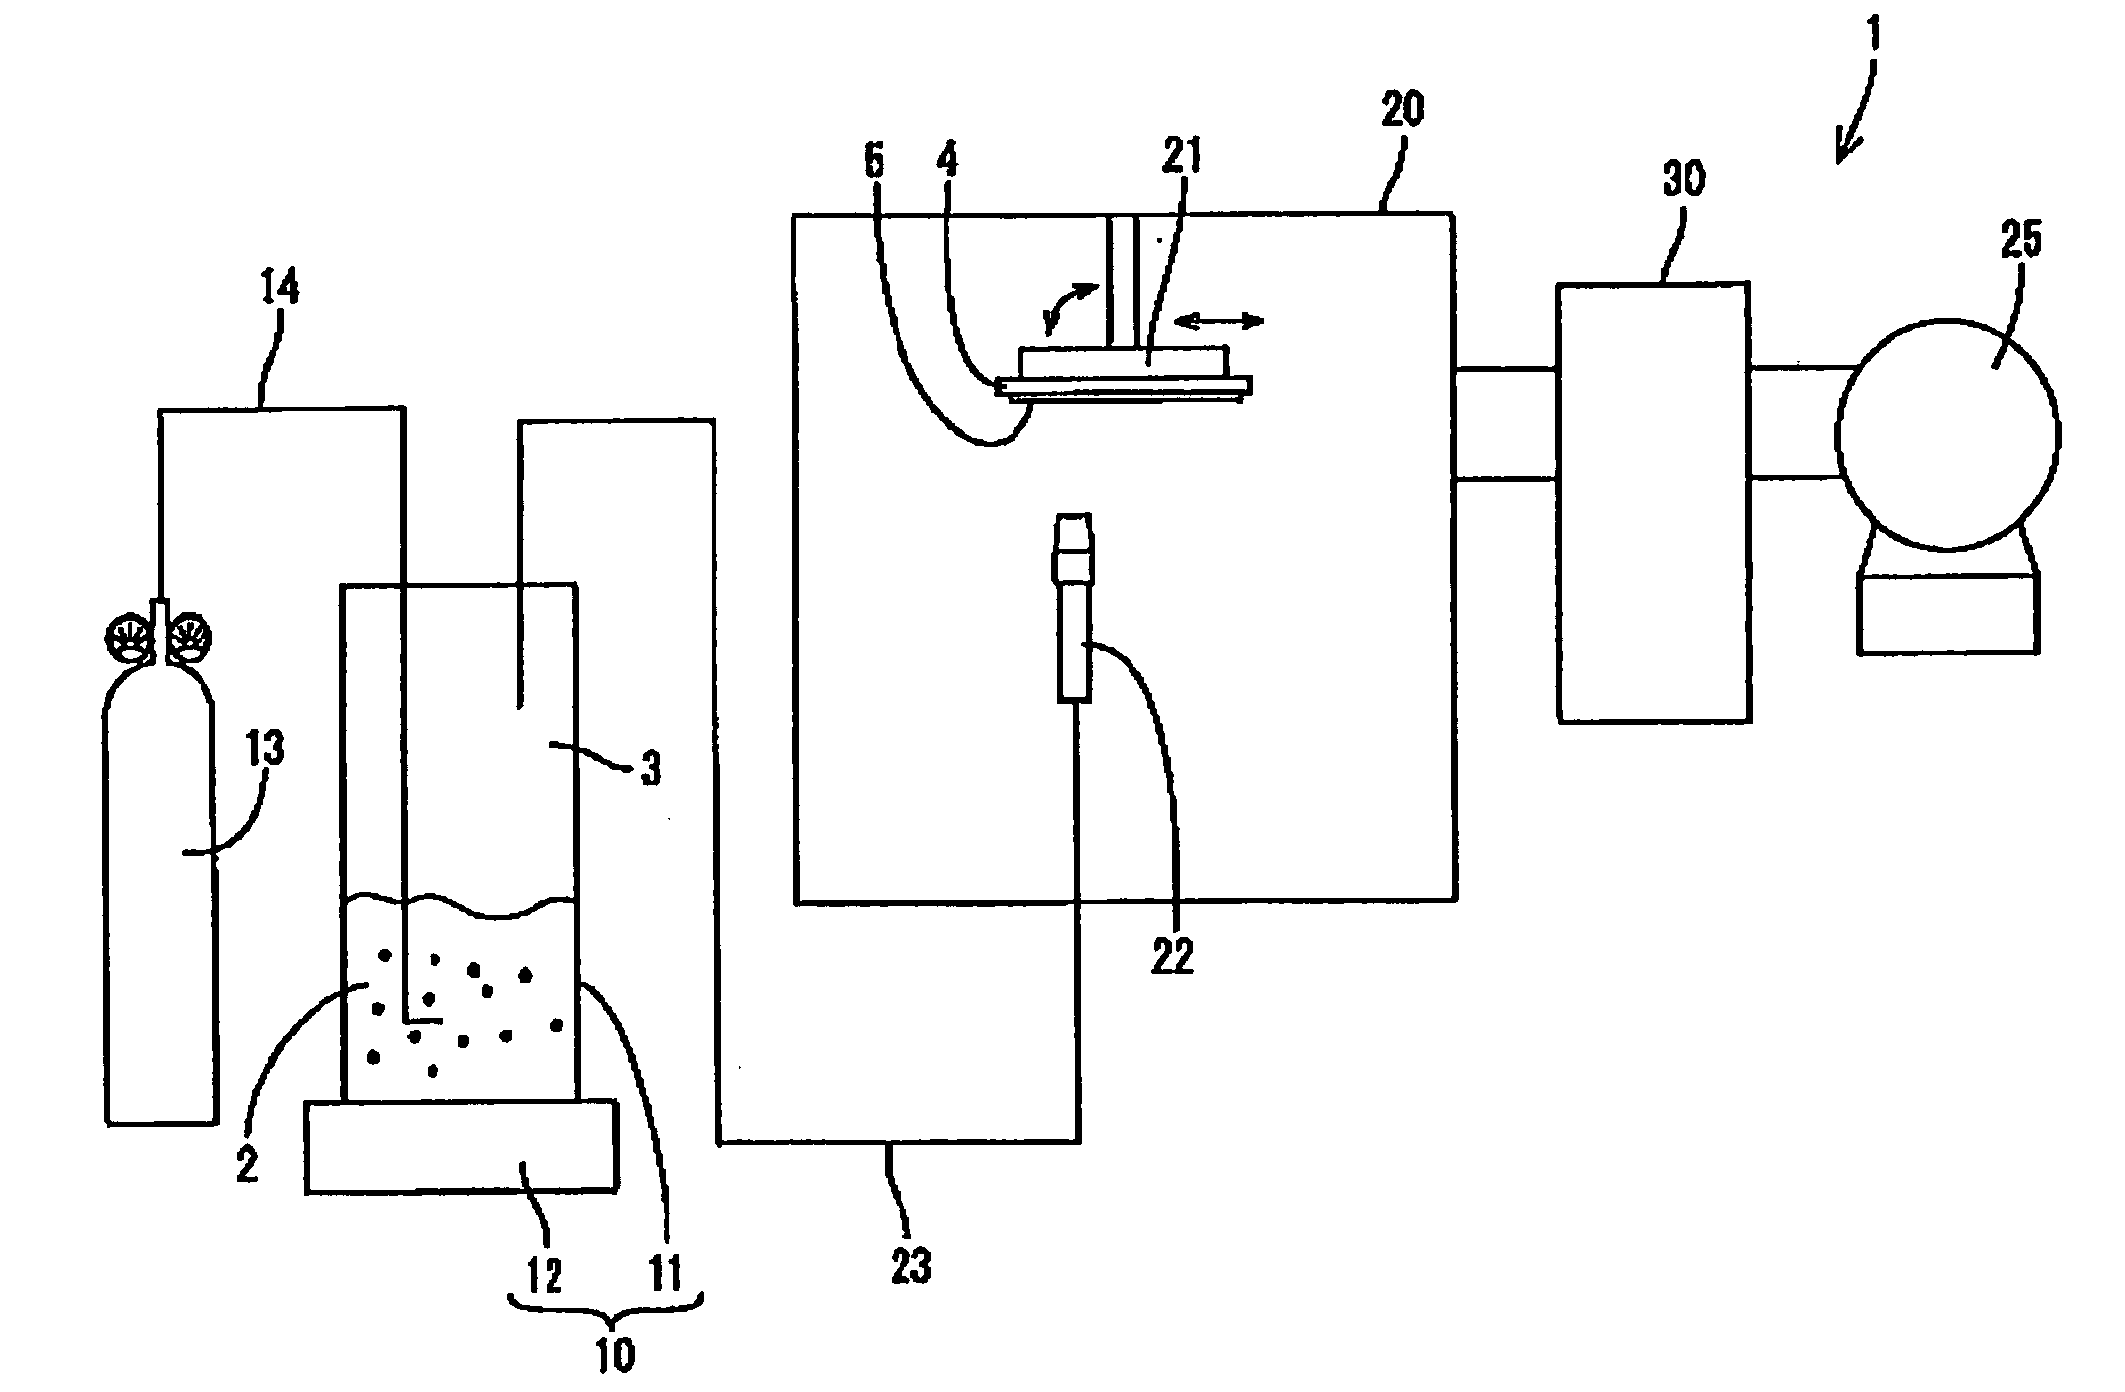 Method for manufacturing film or piezoelectric film